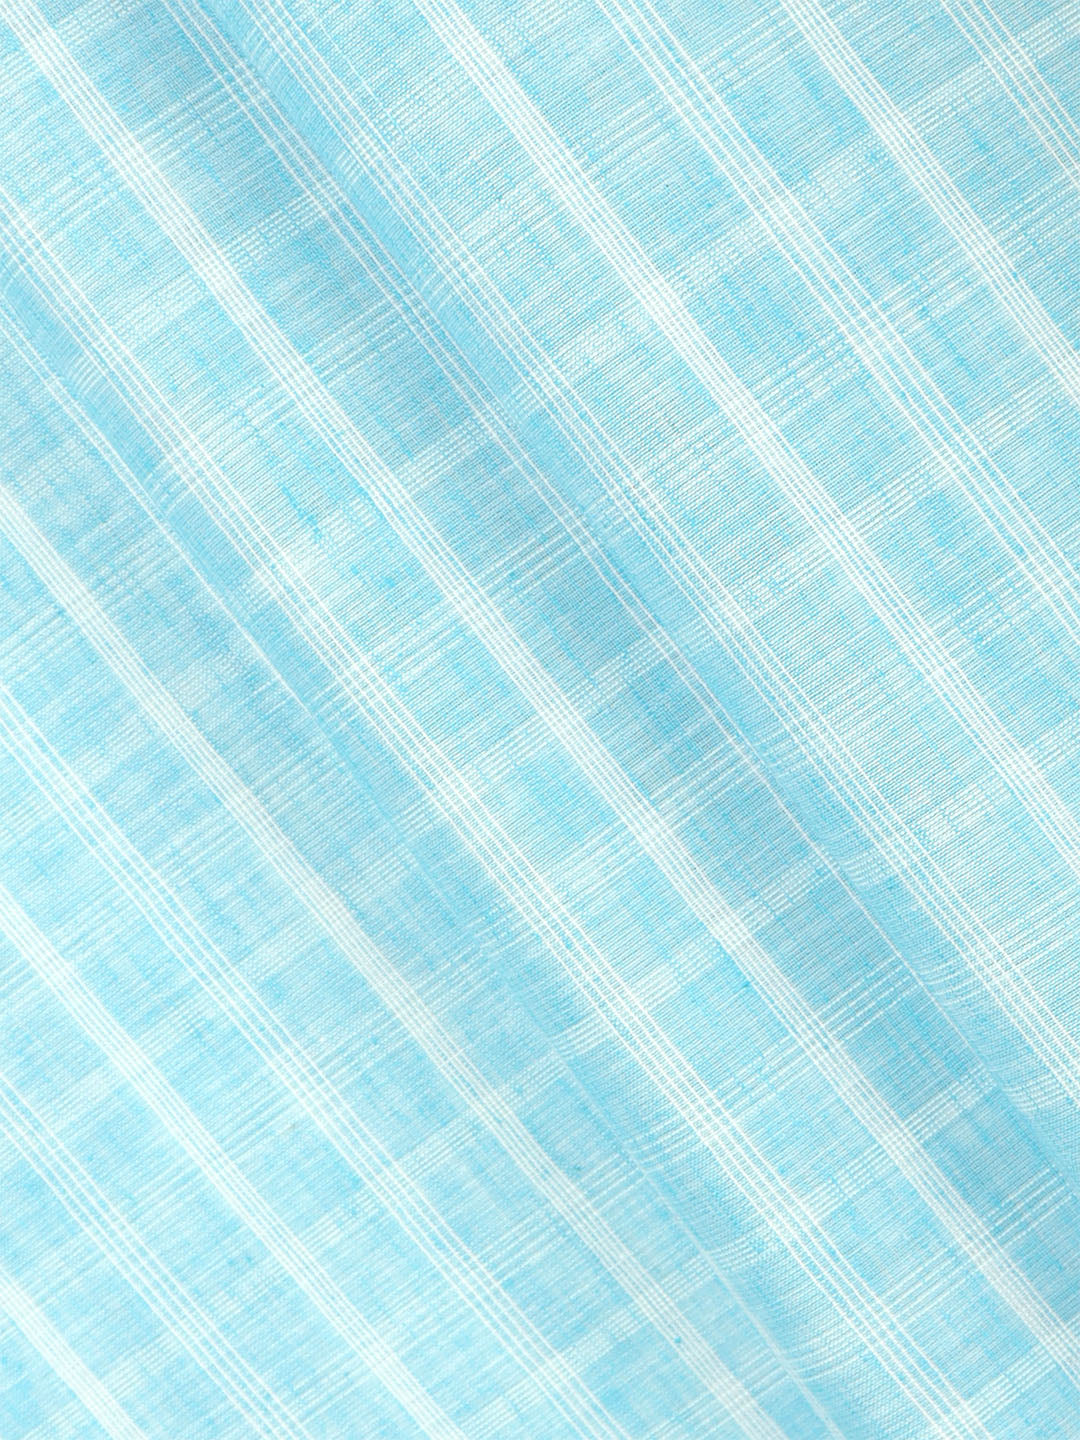 Cotton Checks Blue Colour Traditional Shirting Fabric High Style